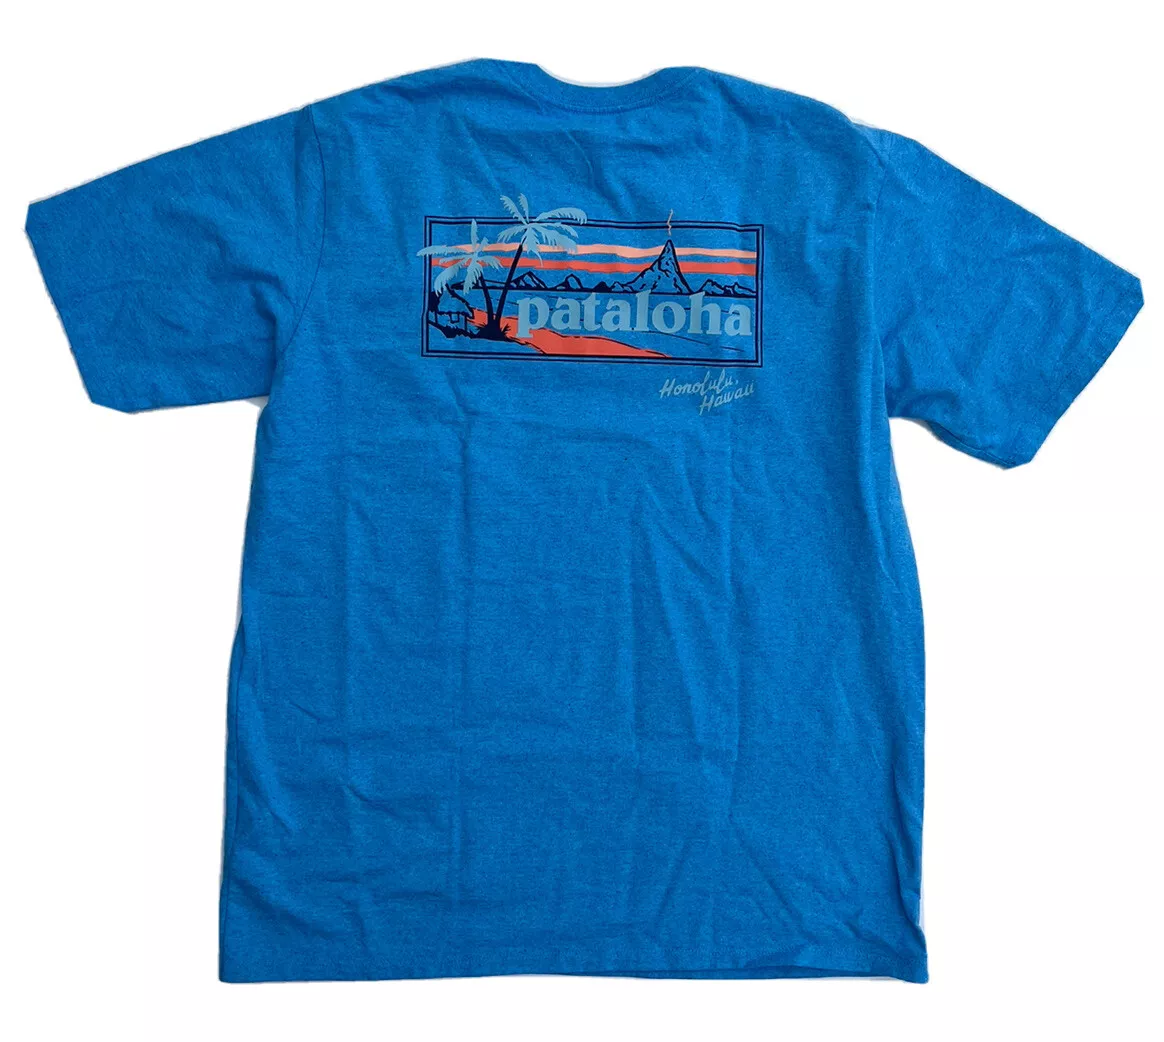 Patagonia Men's T-shirt Pataloha Limited Haleiwa Hawaii Lago Blue Medium